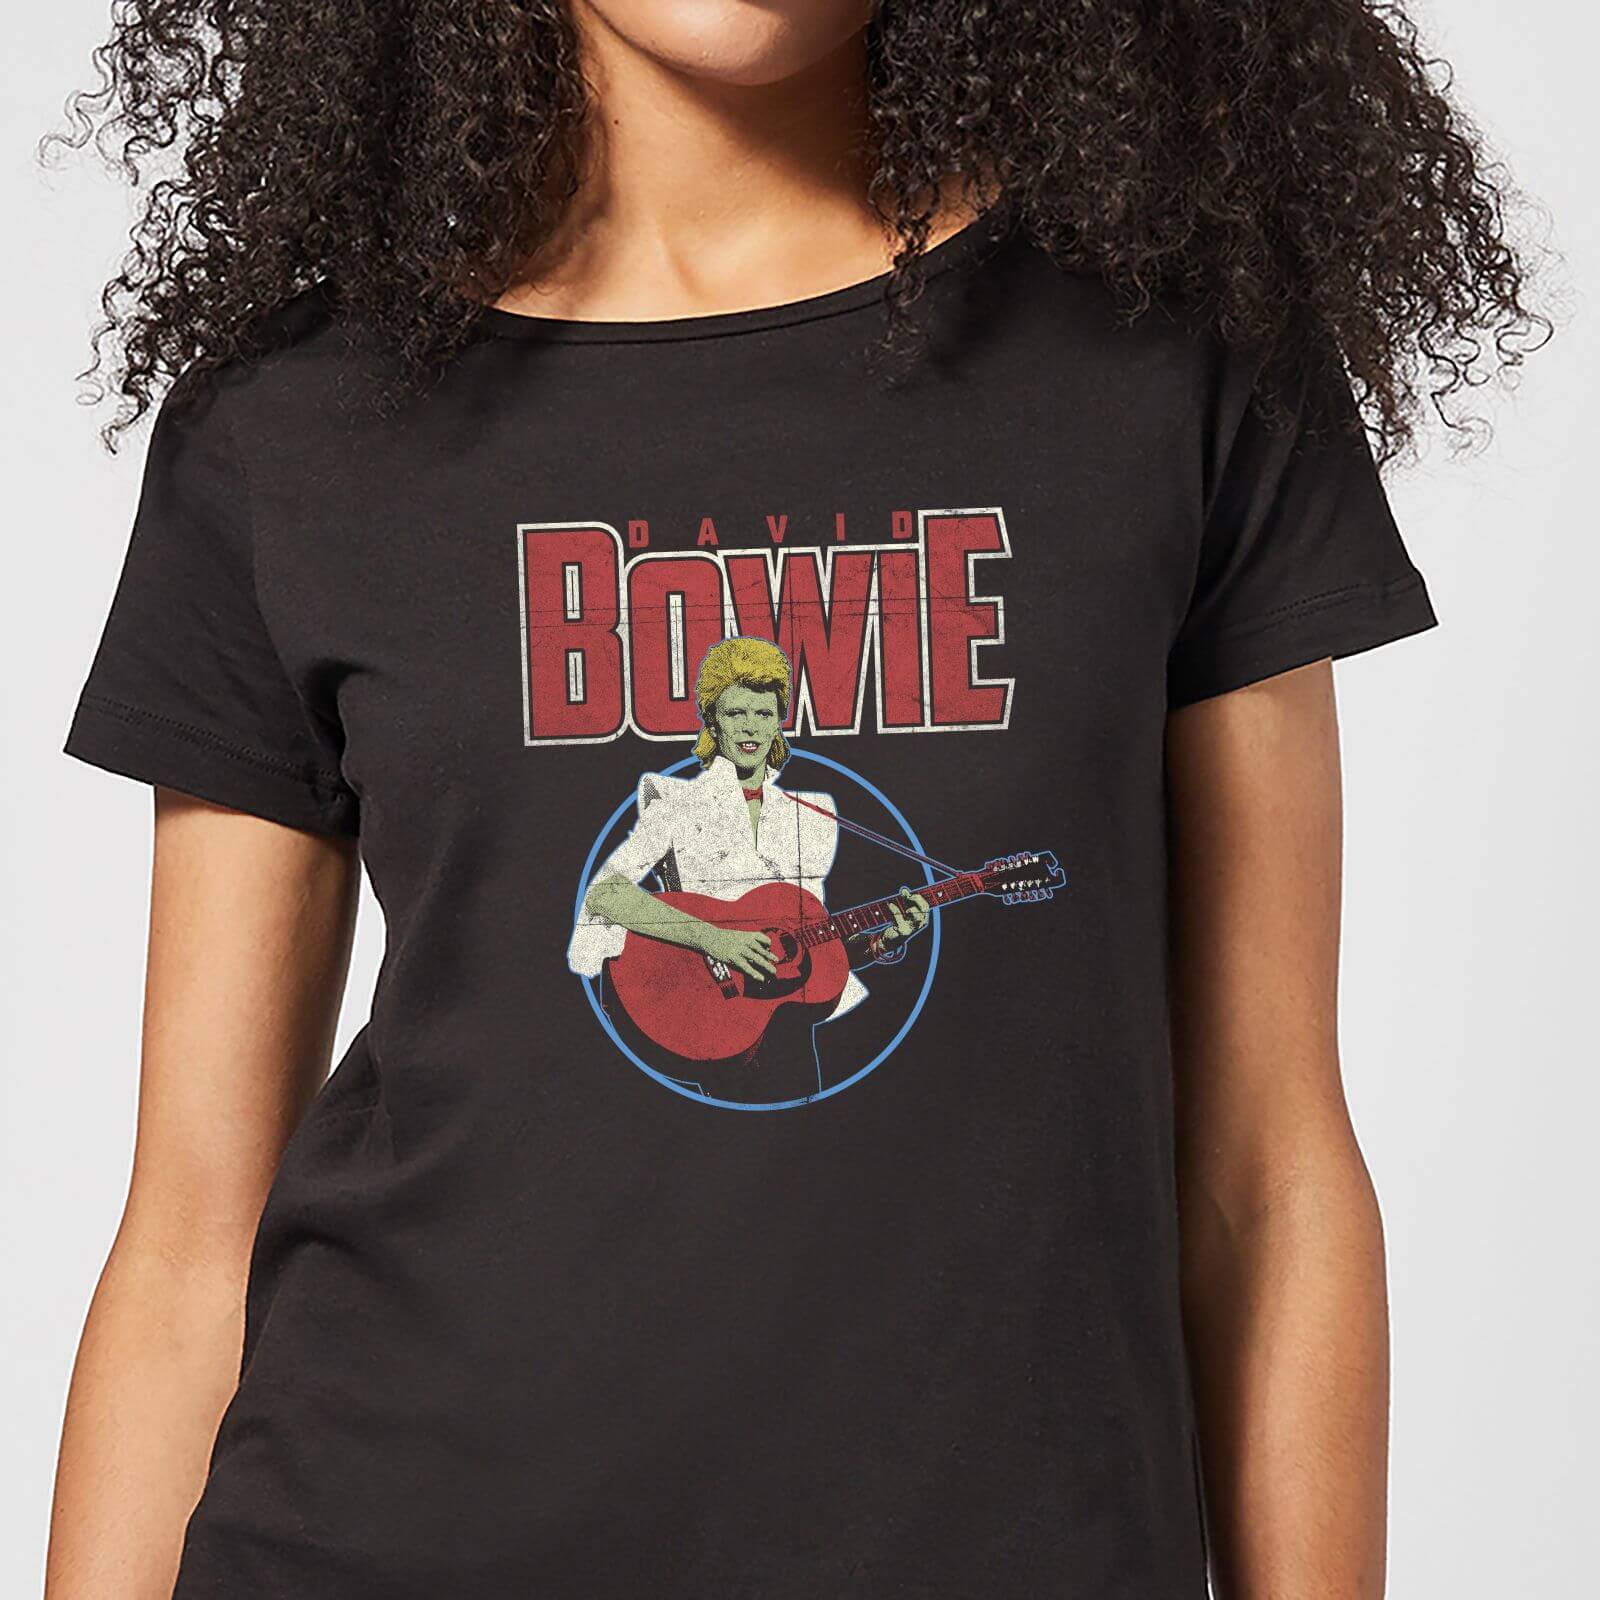 David Bowie Bootleg Women's T-Shirt - Black - 4XL - Black